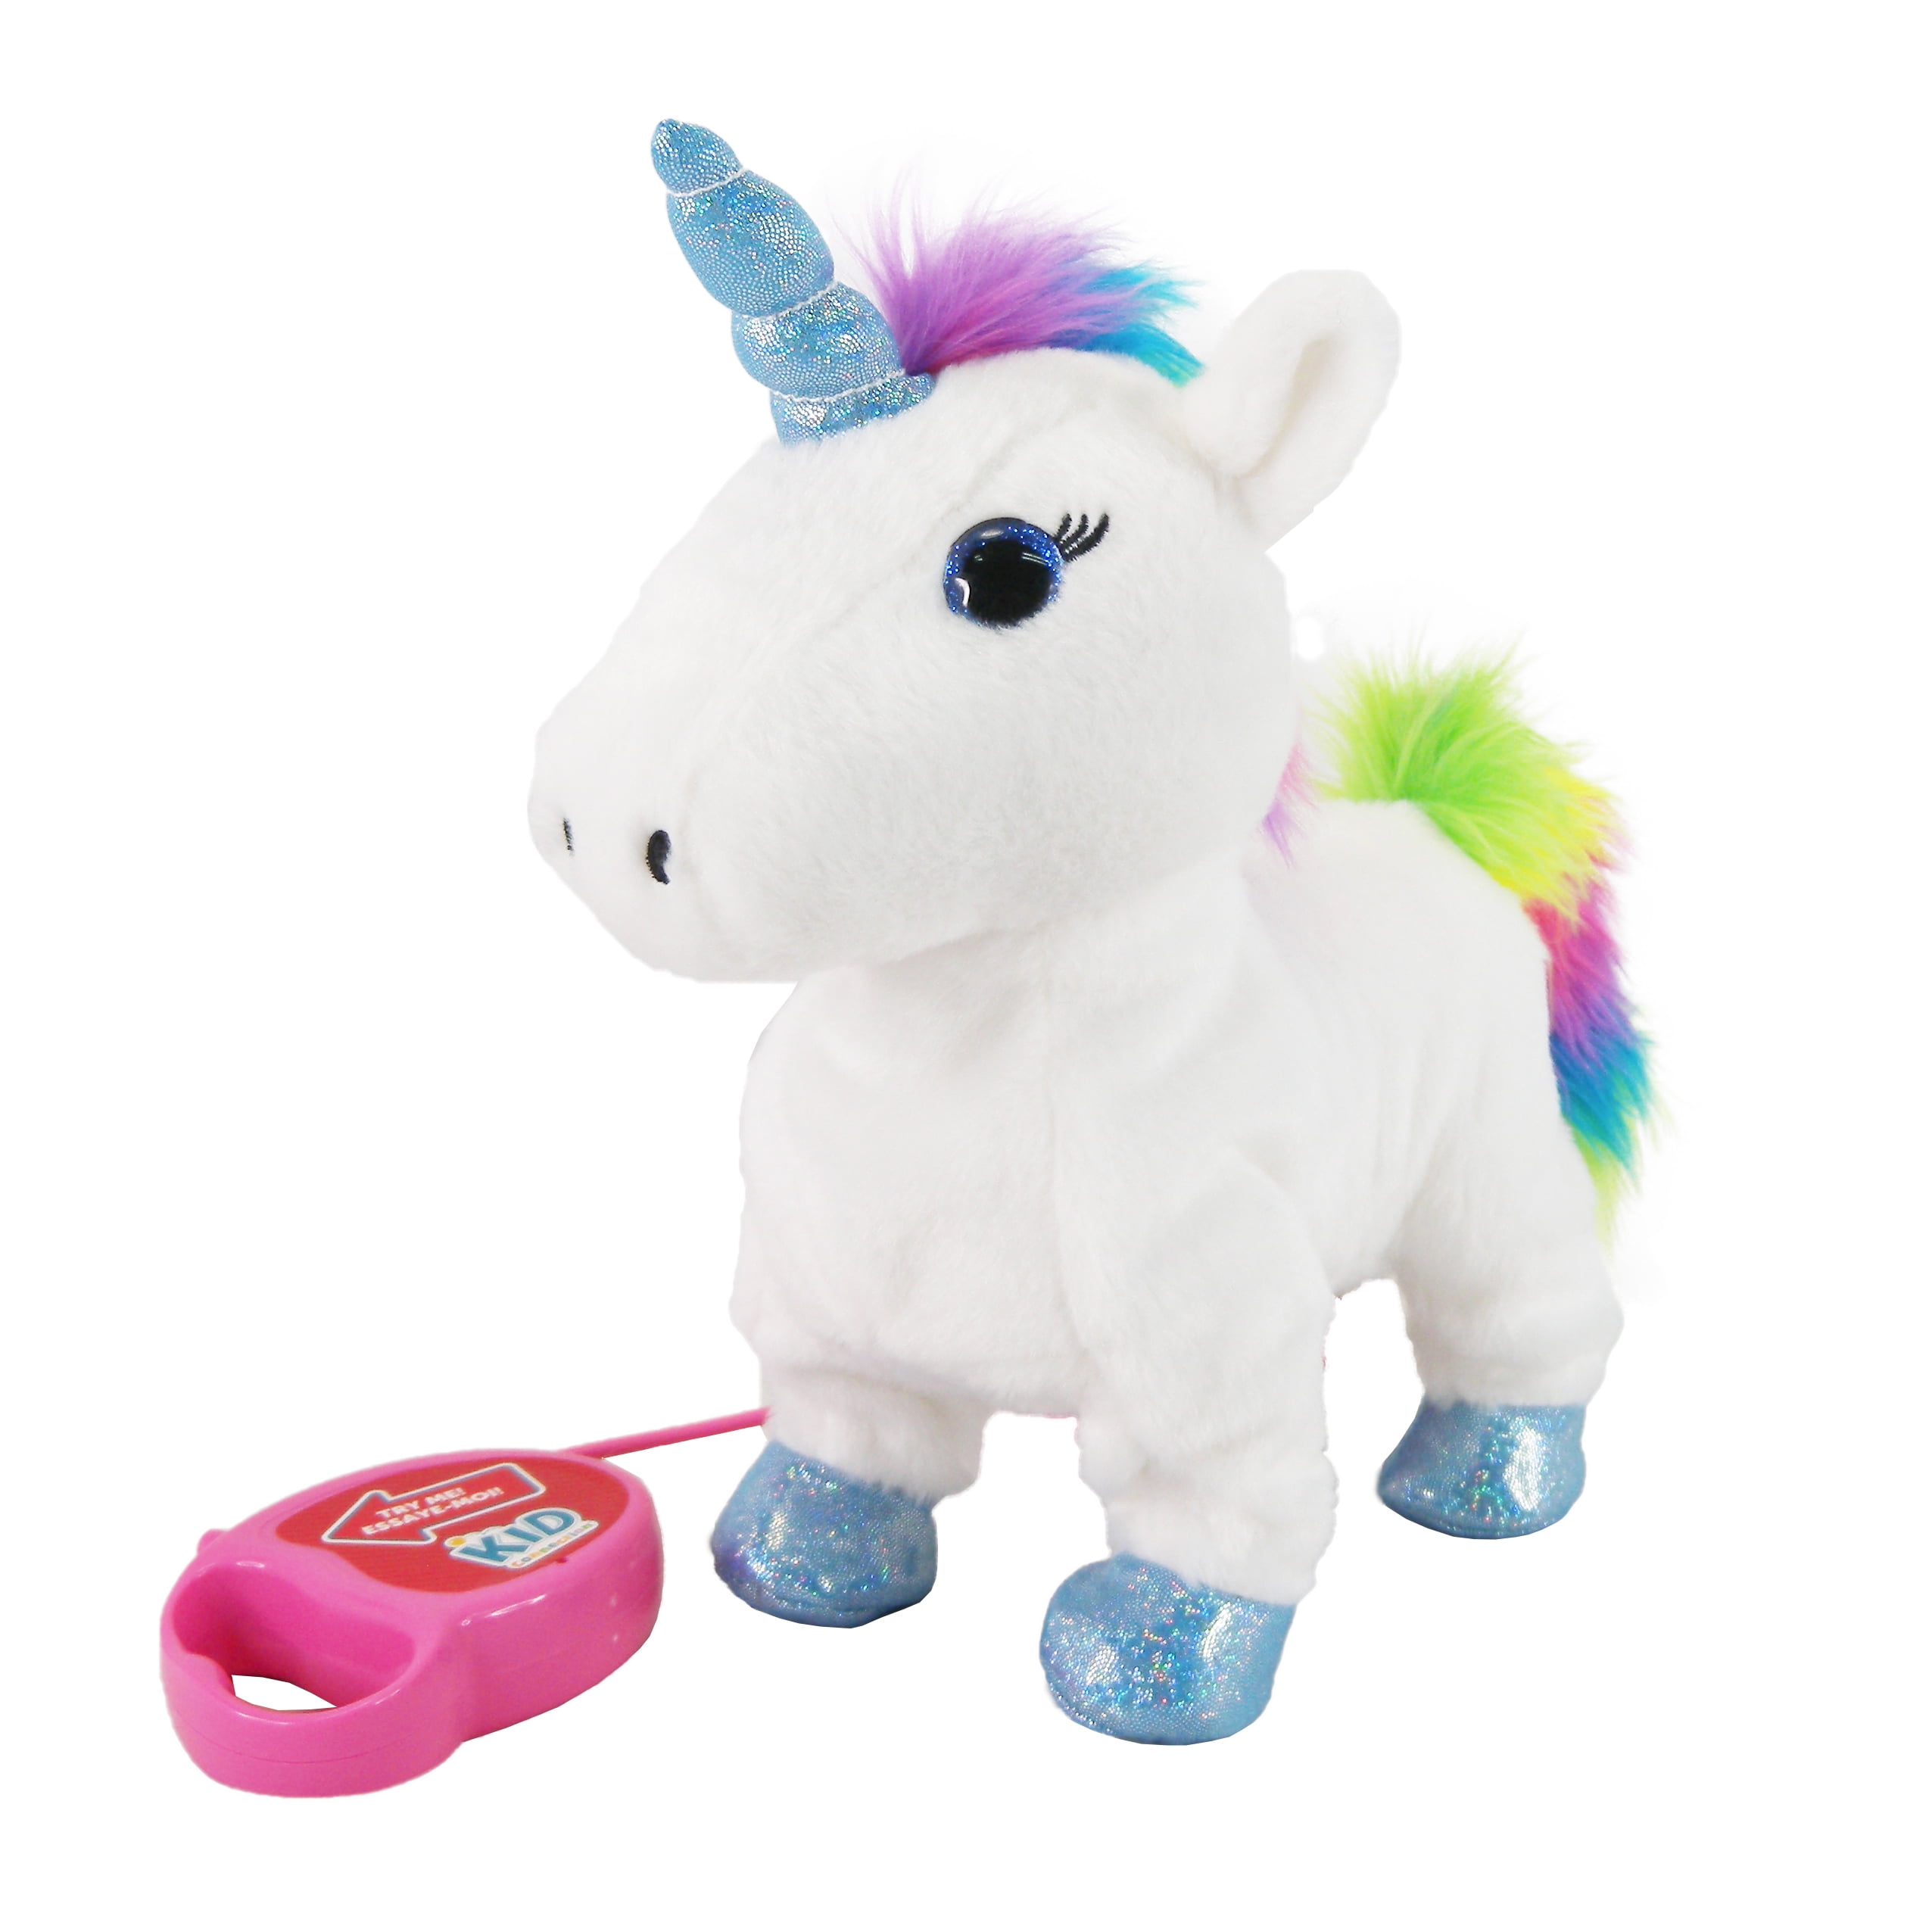 walking unicorn toy kid connection